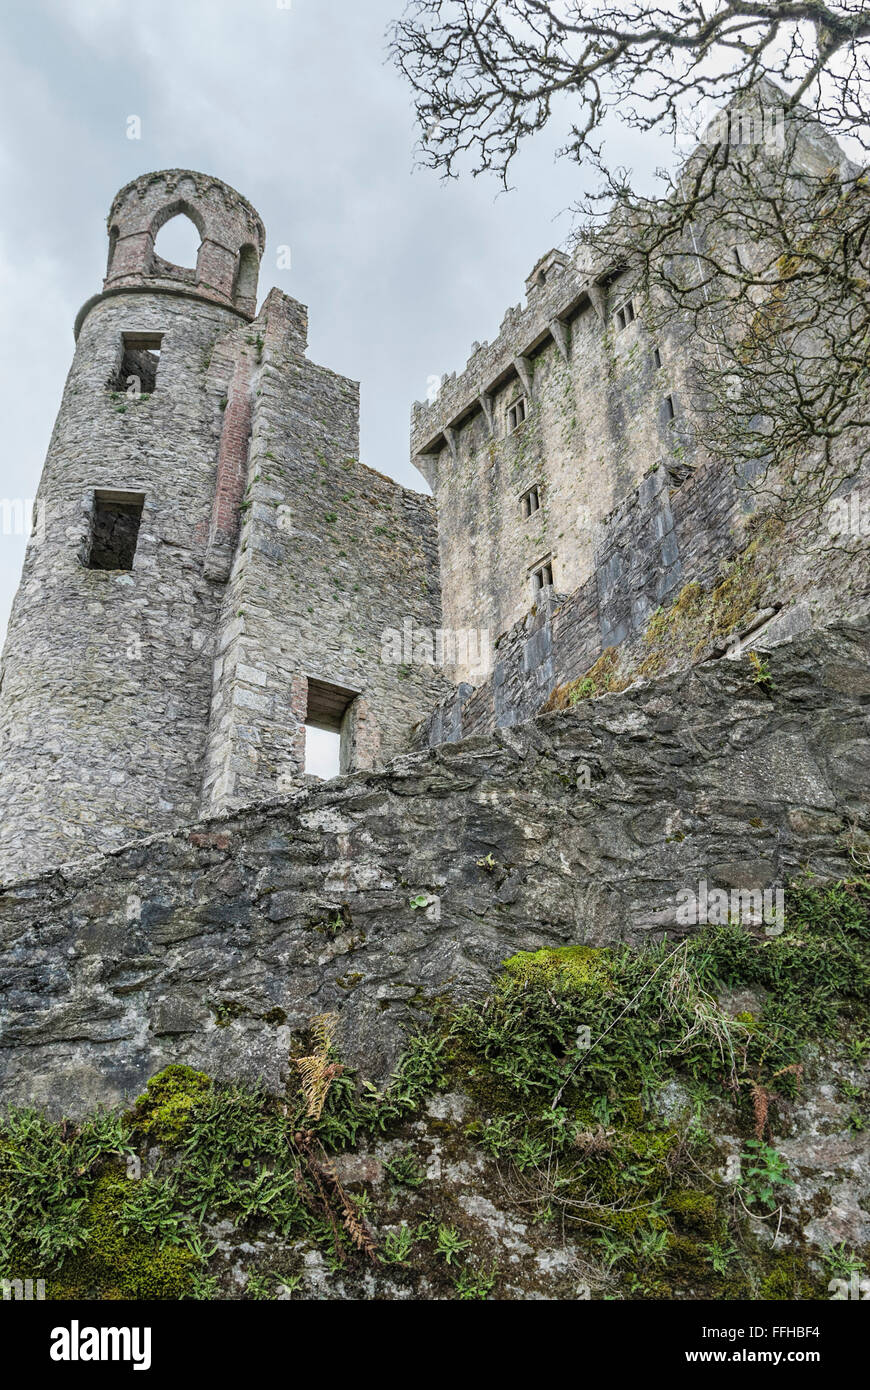 Blarney Castle home of the legendary stone of Blarney, Cork, Ireland Stock Photo